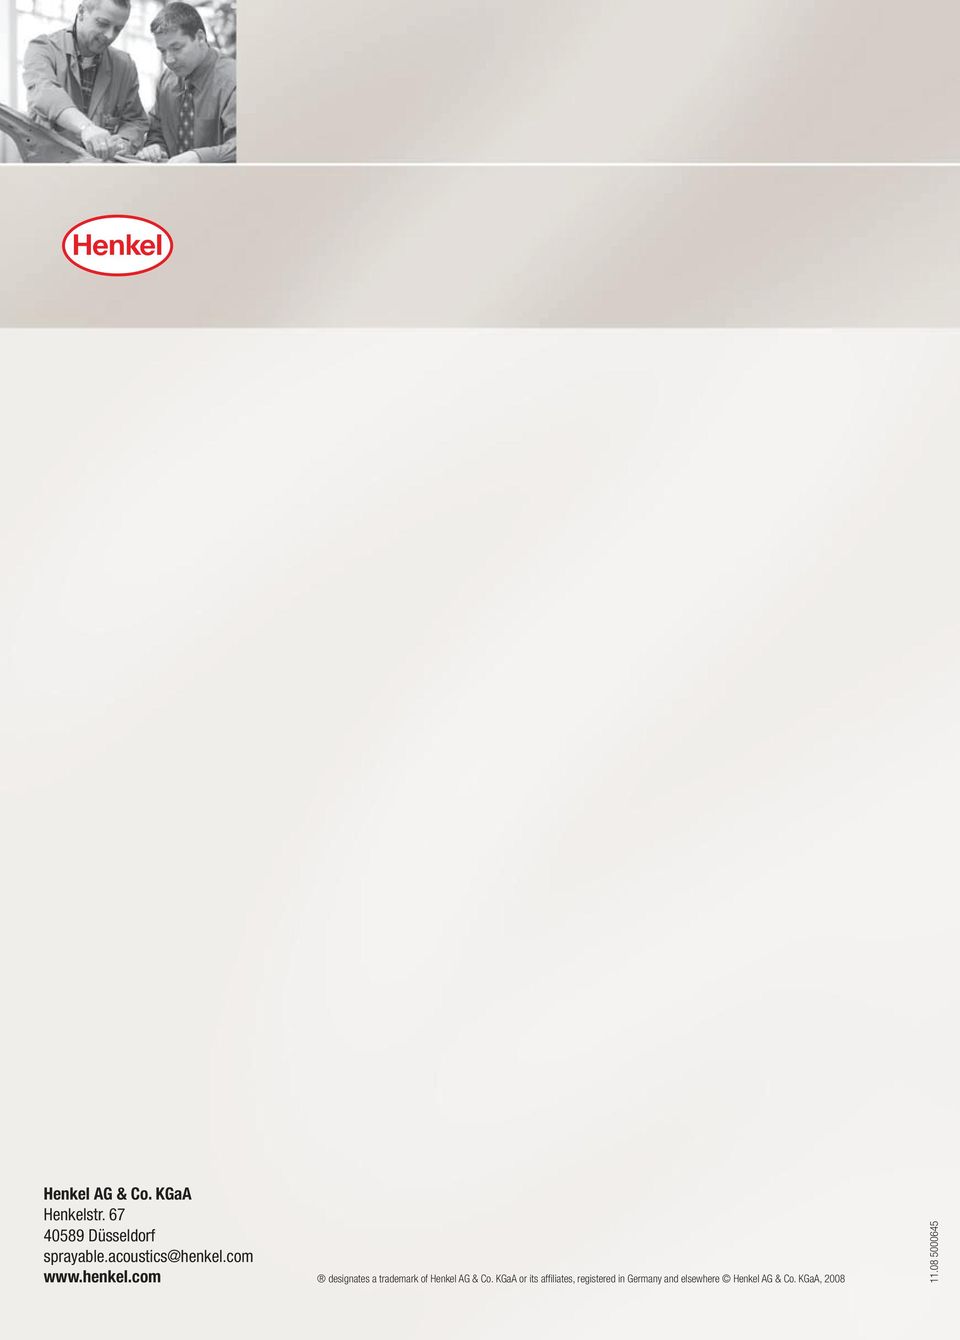 henkel.com designates a trademark of Henkel AG & Co.